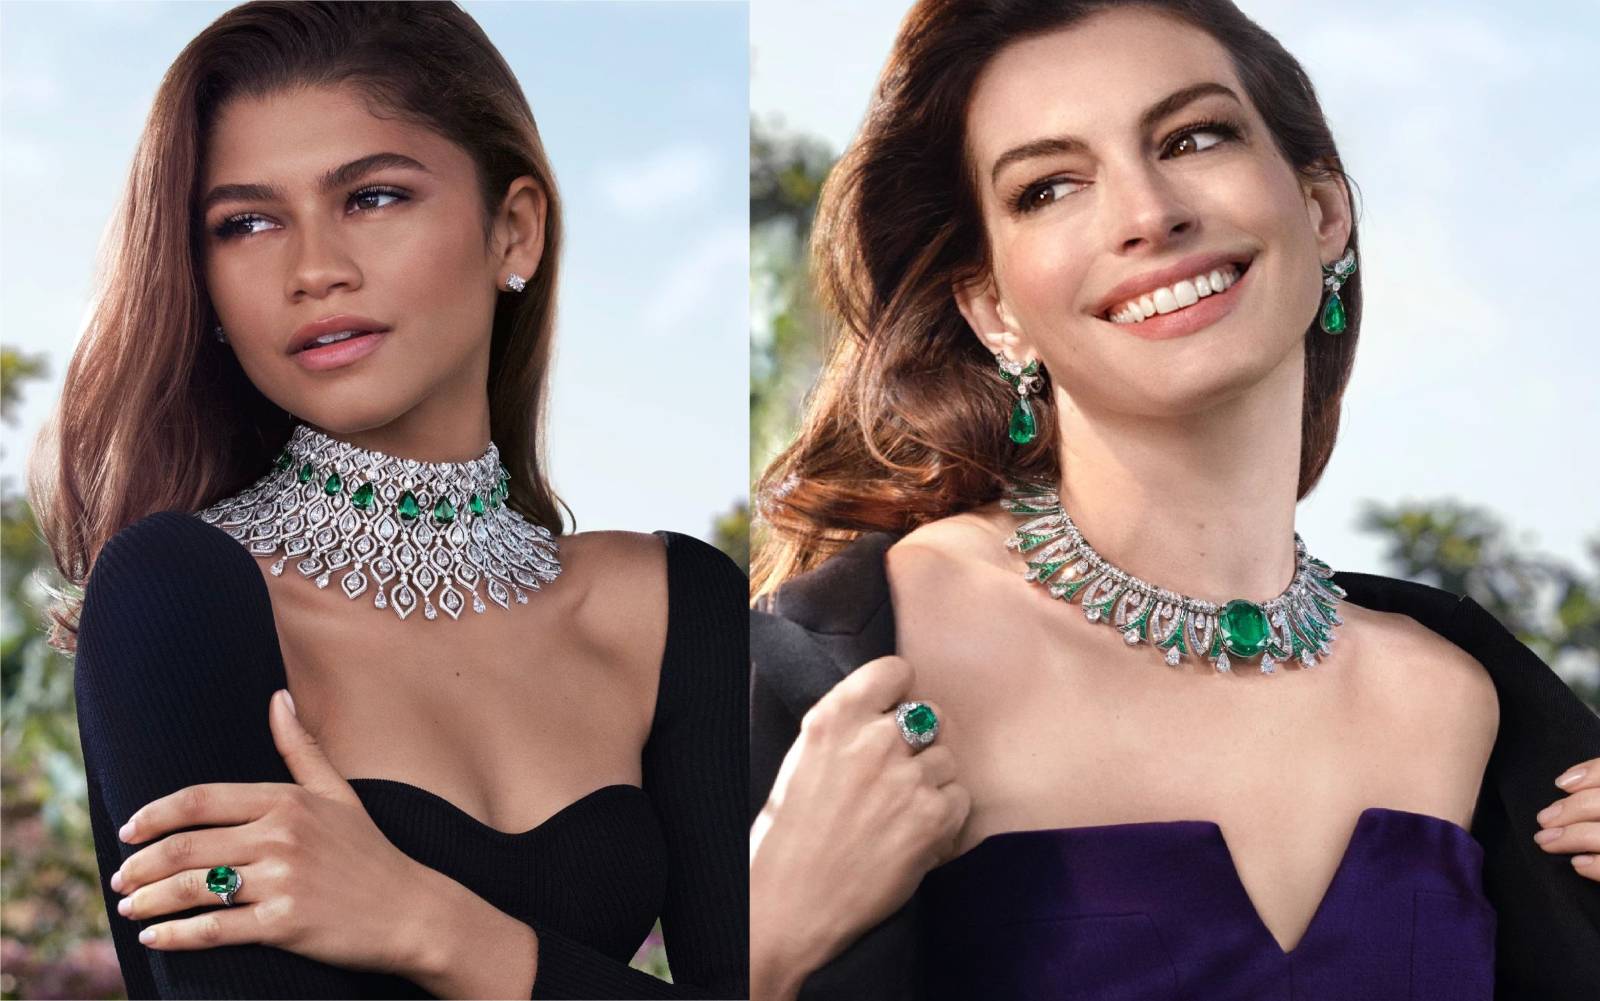 Priyanka Chopra, Anne Hathaway and Zendaya show off glamorous fashions in  Italy - ABC News